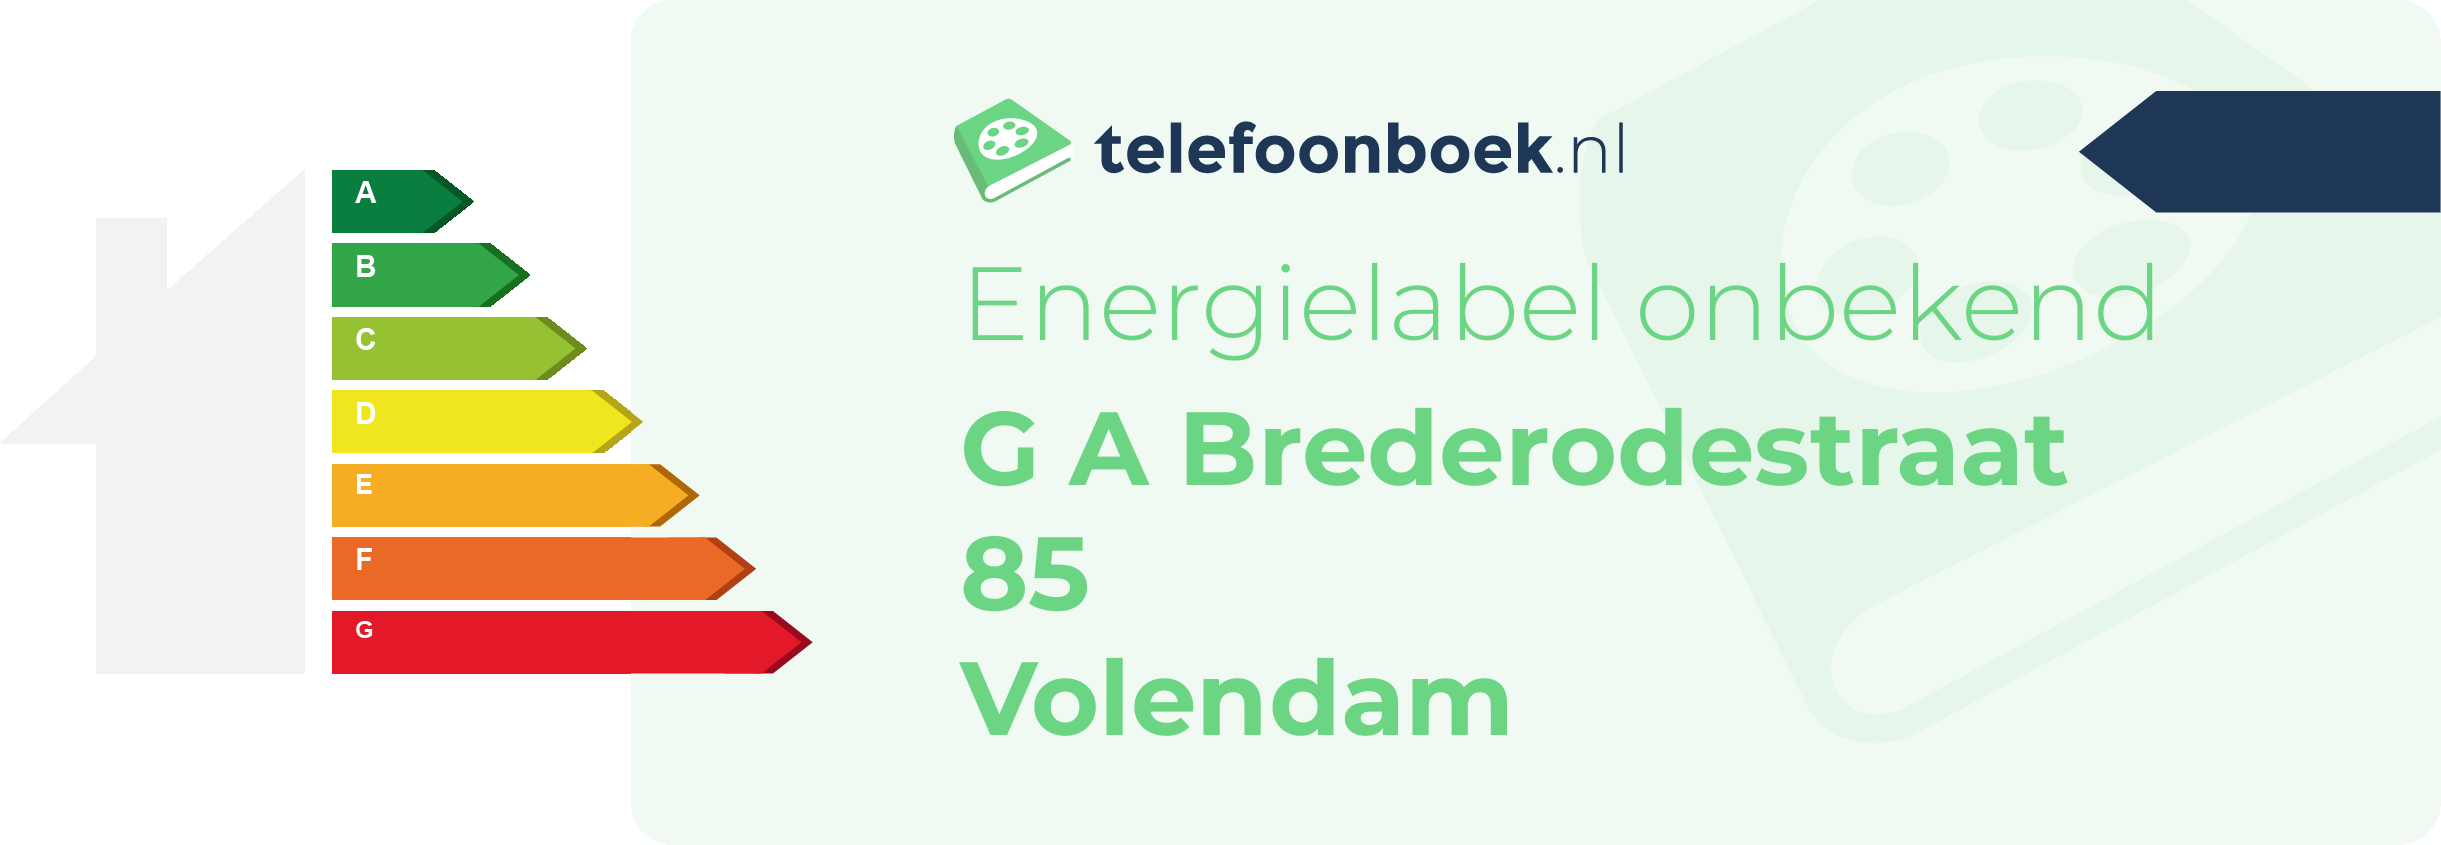 Energielabel G A Brederodestraat 85 Volendam